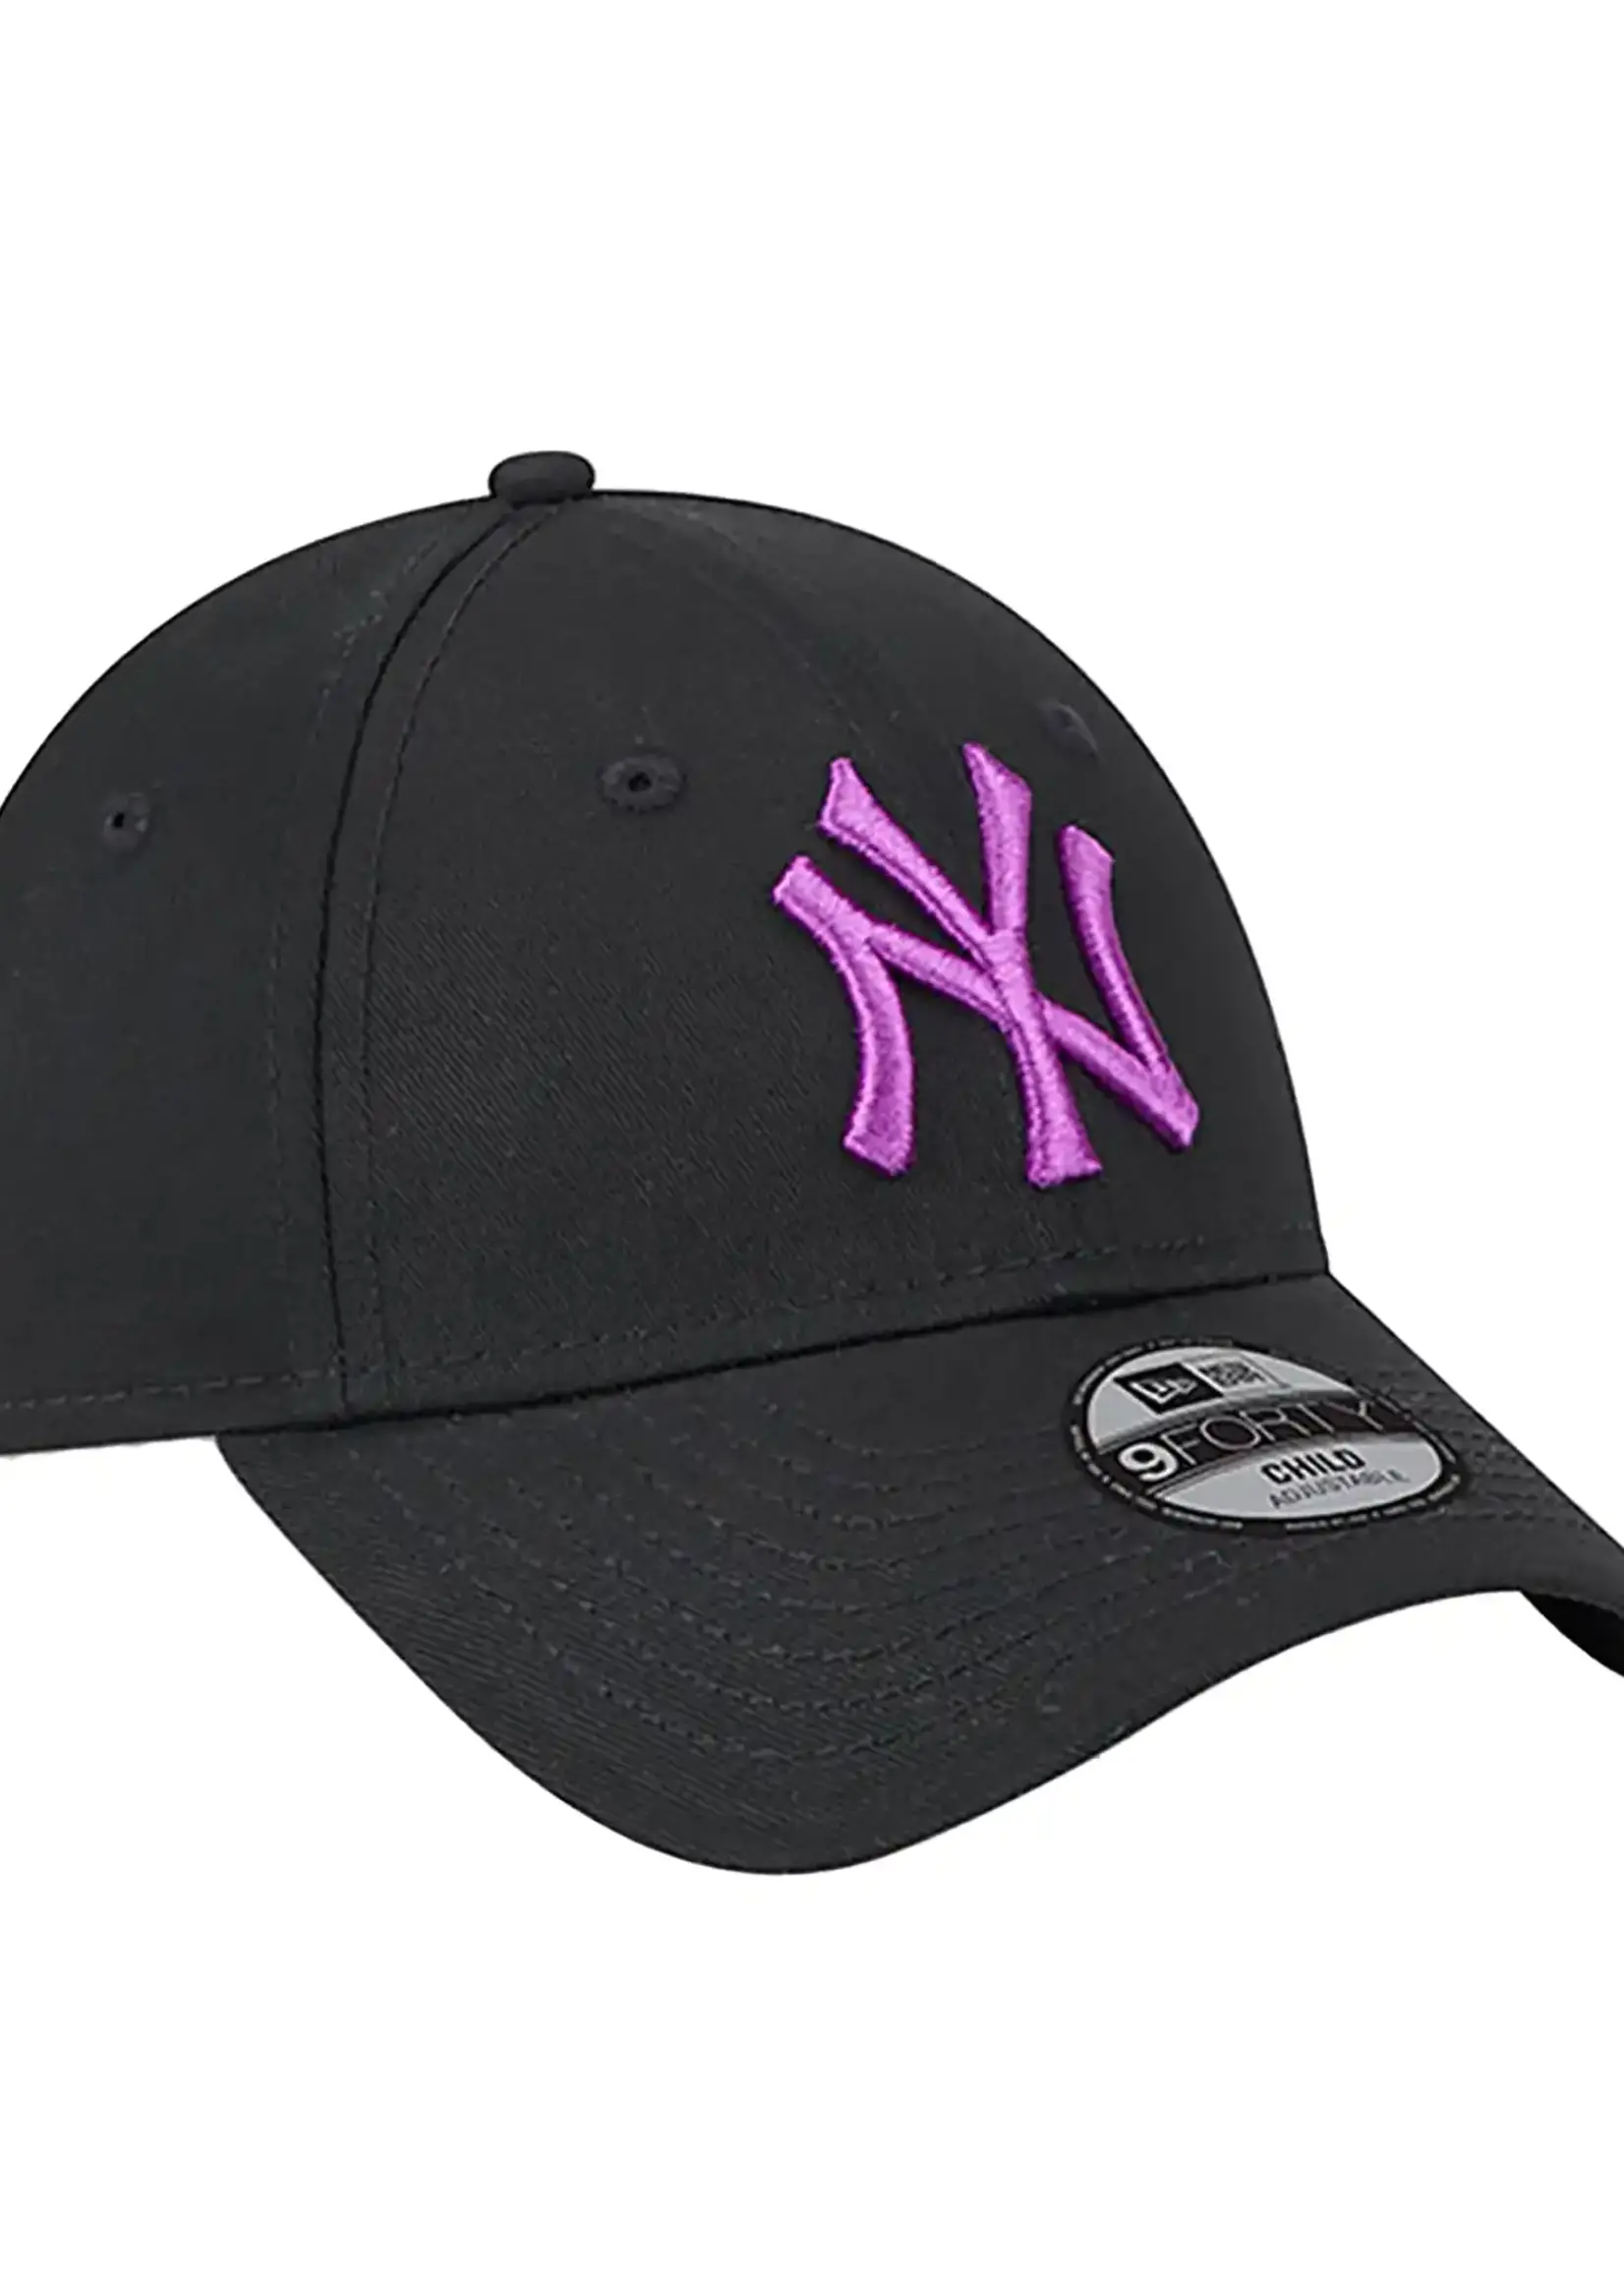 New Era New York Yankees  9Forty Youth Cap Black Purple